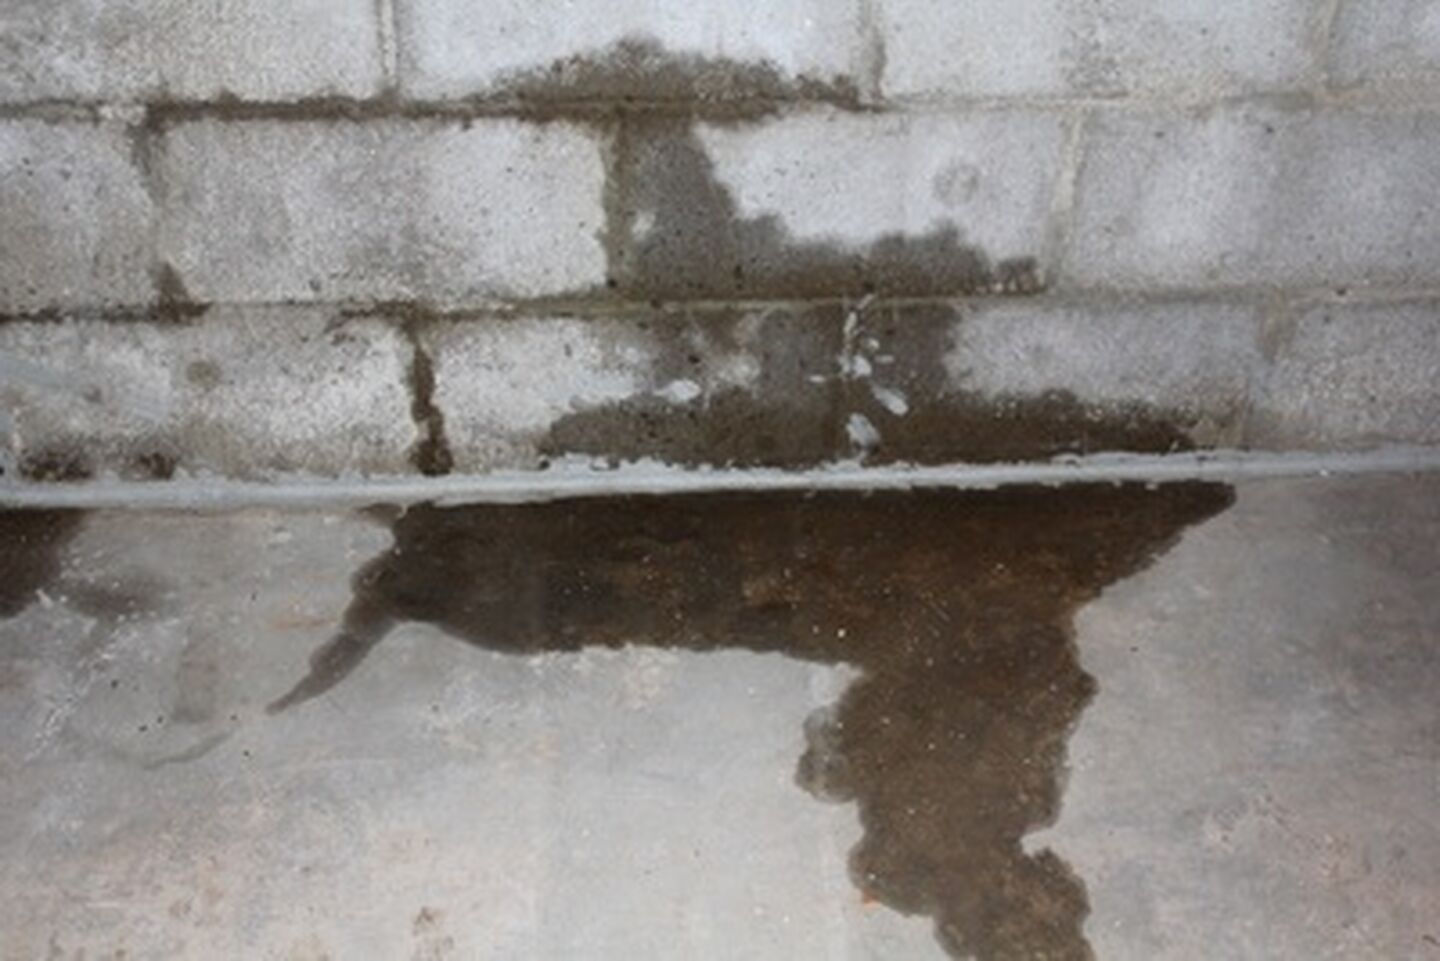 NW Indiana Basement Waterproofing - Look Before You Remodel